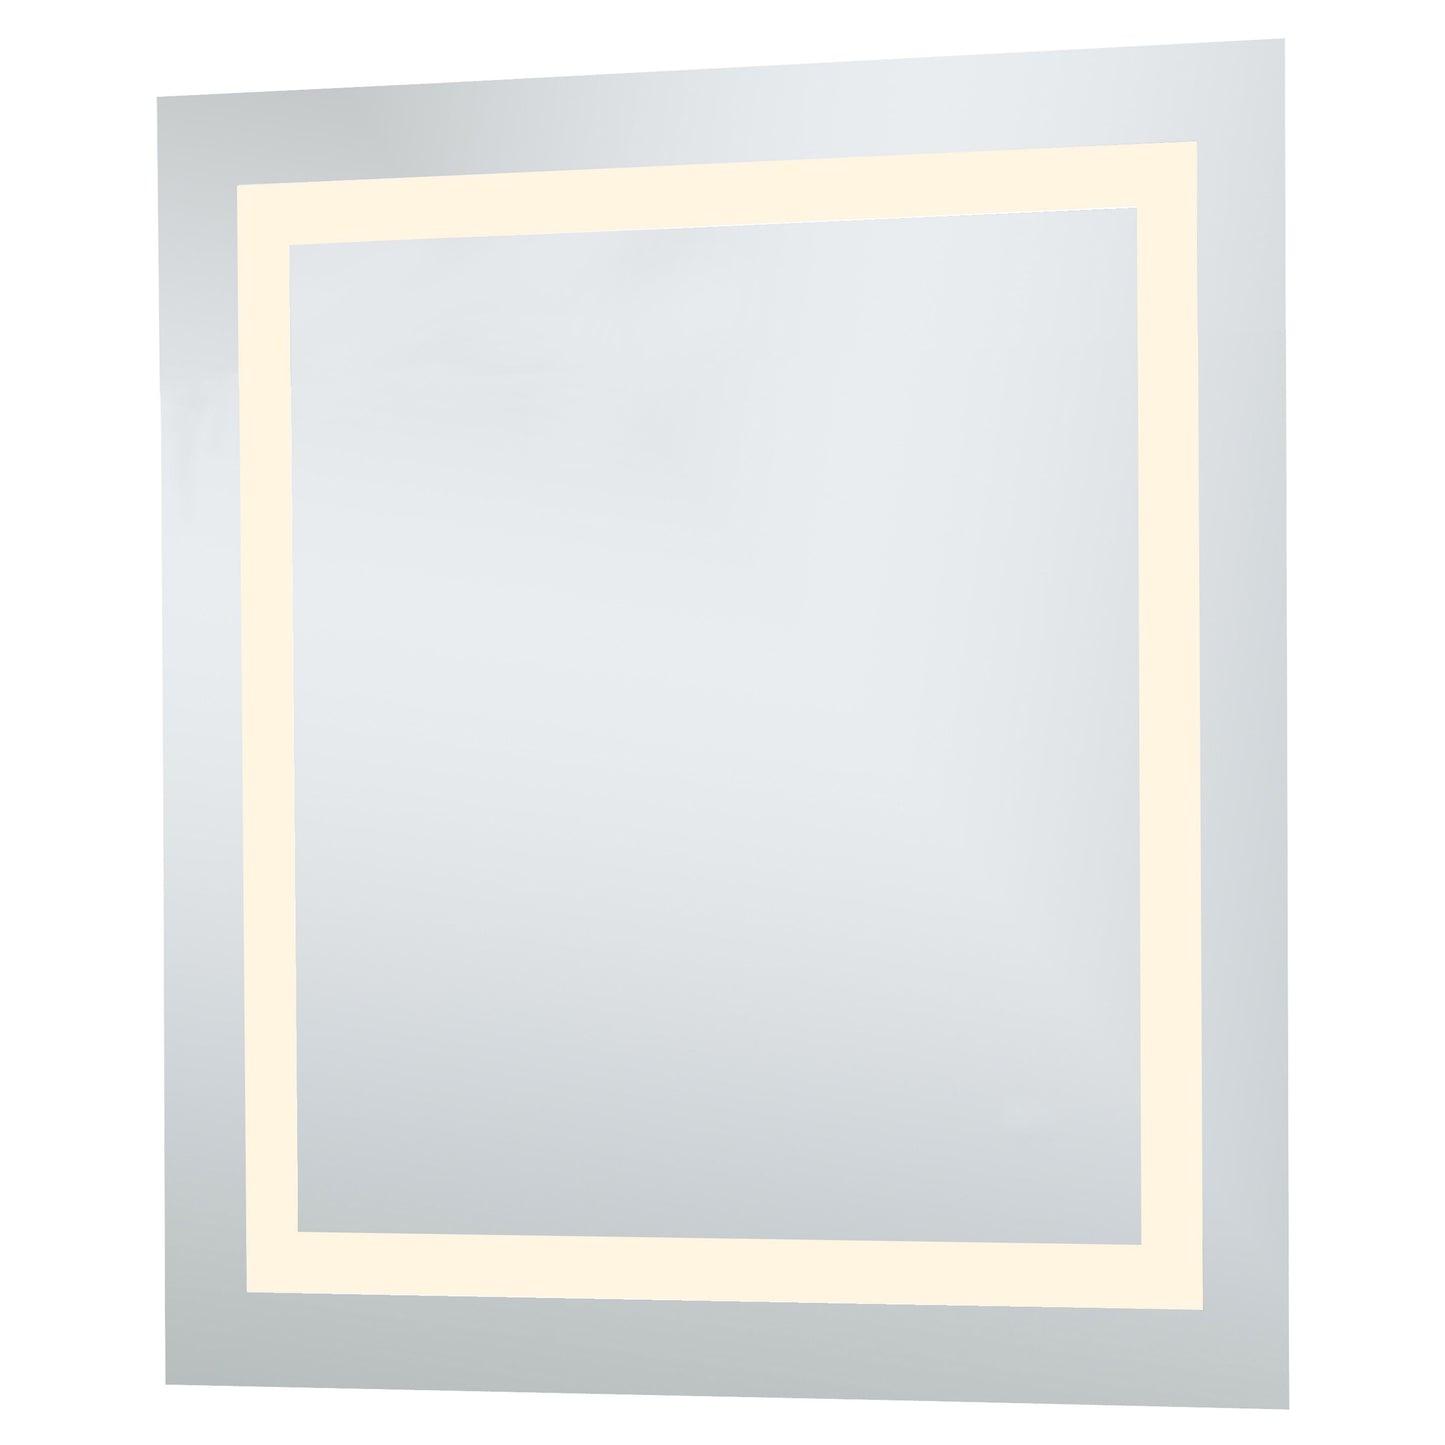 MRE-6020 Nova 28" x 28" LED Mirror in Glossy White - 3000K